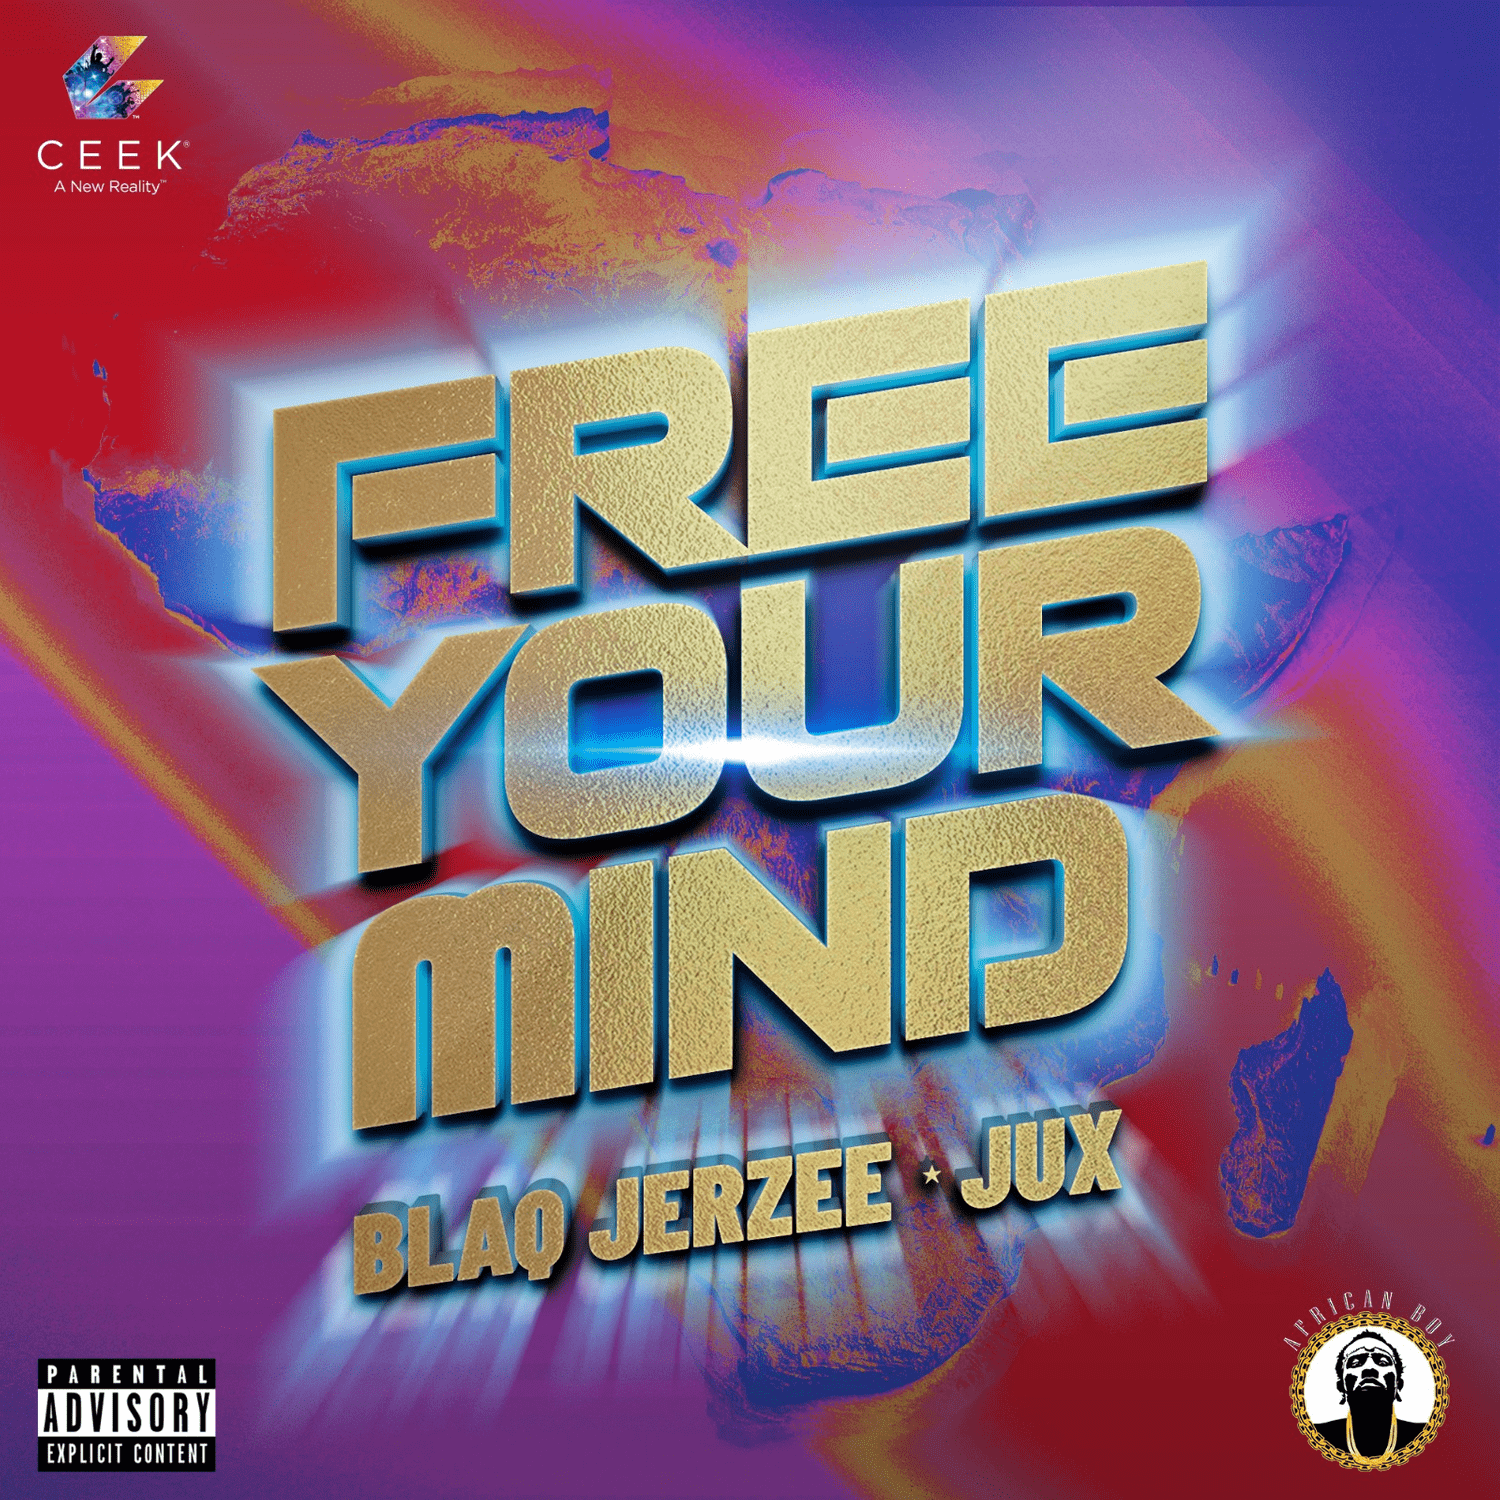 blaq jerzee jux free your mind - Bekaboy